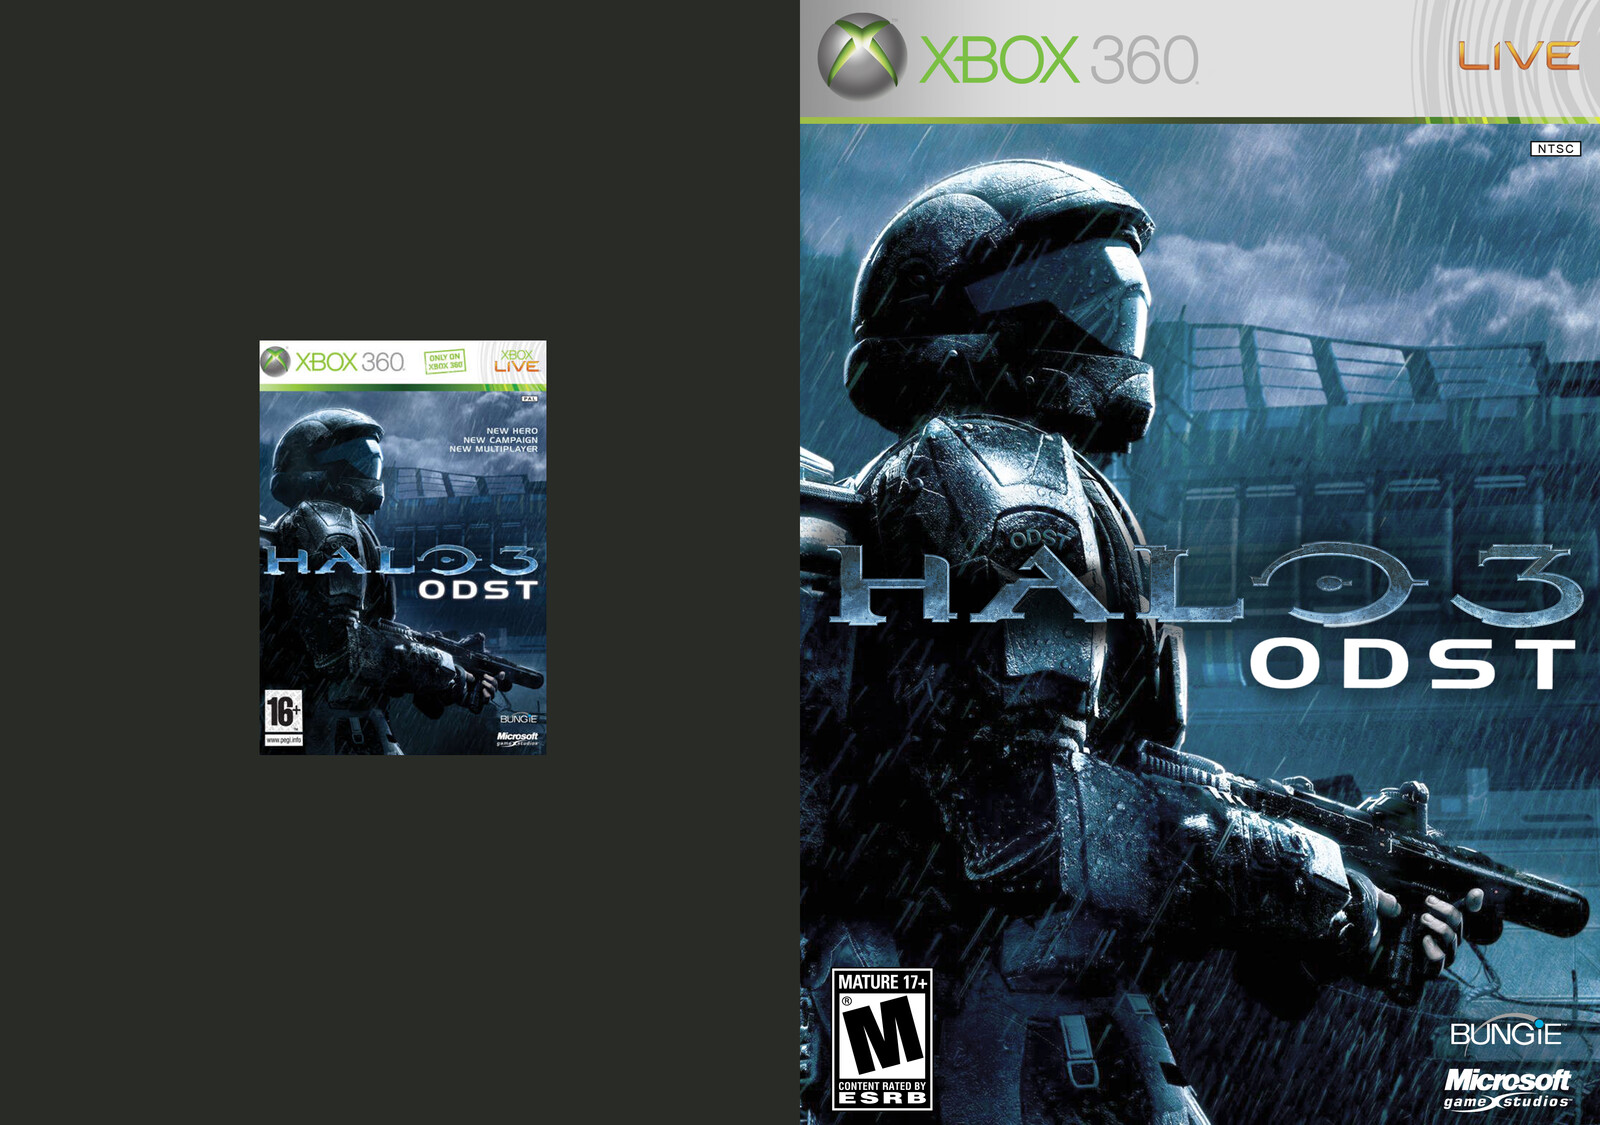 Halo 3 ODST (original scan cover vs. upscaled)